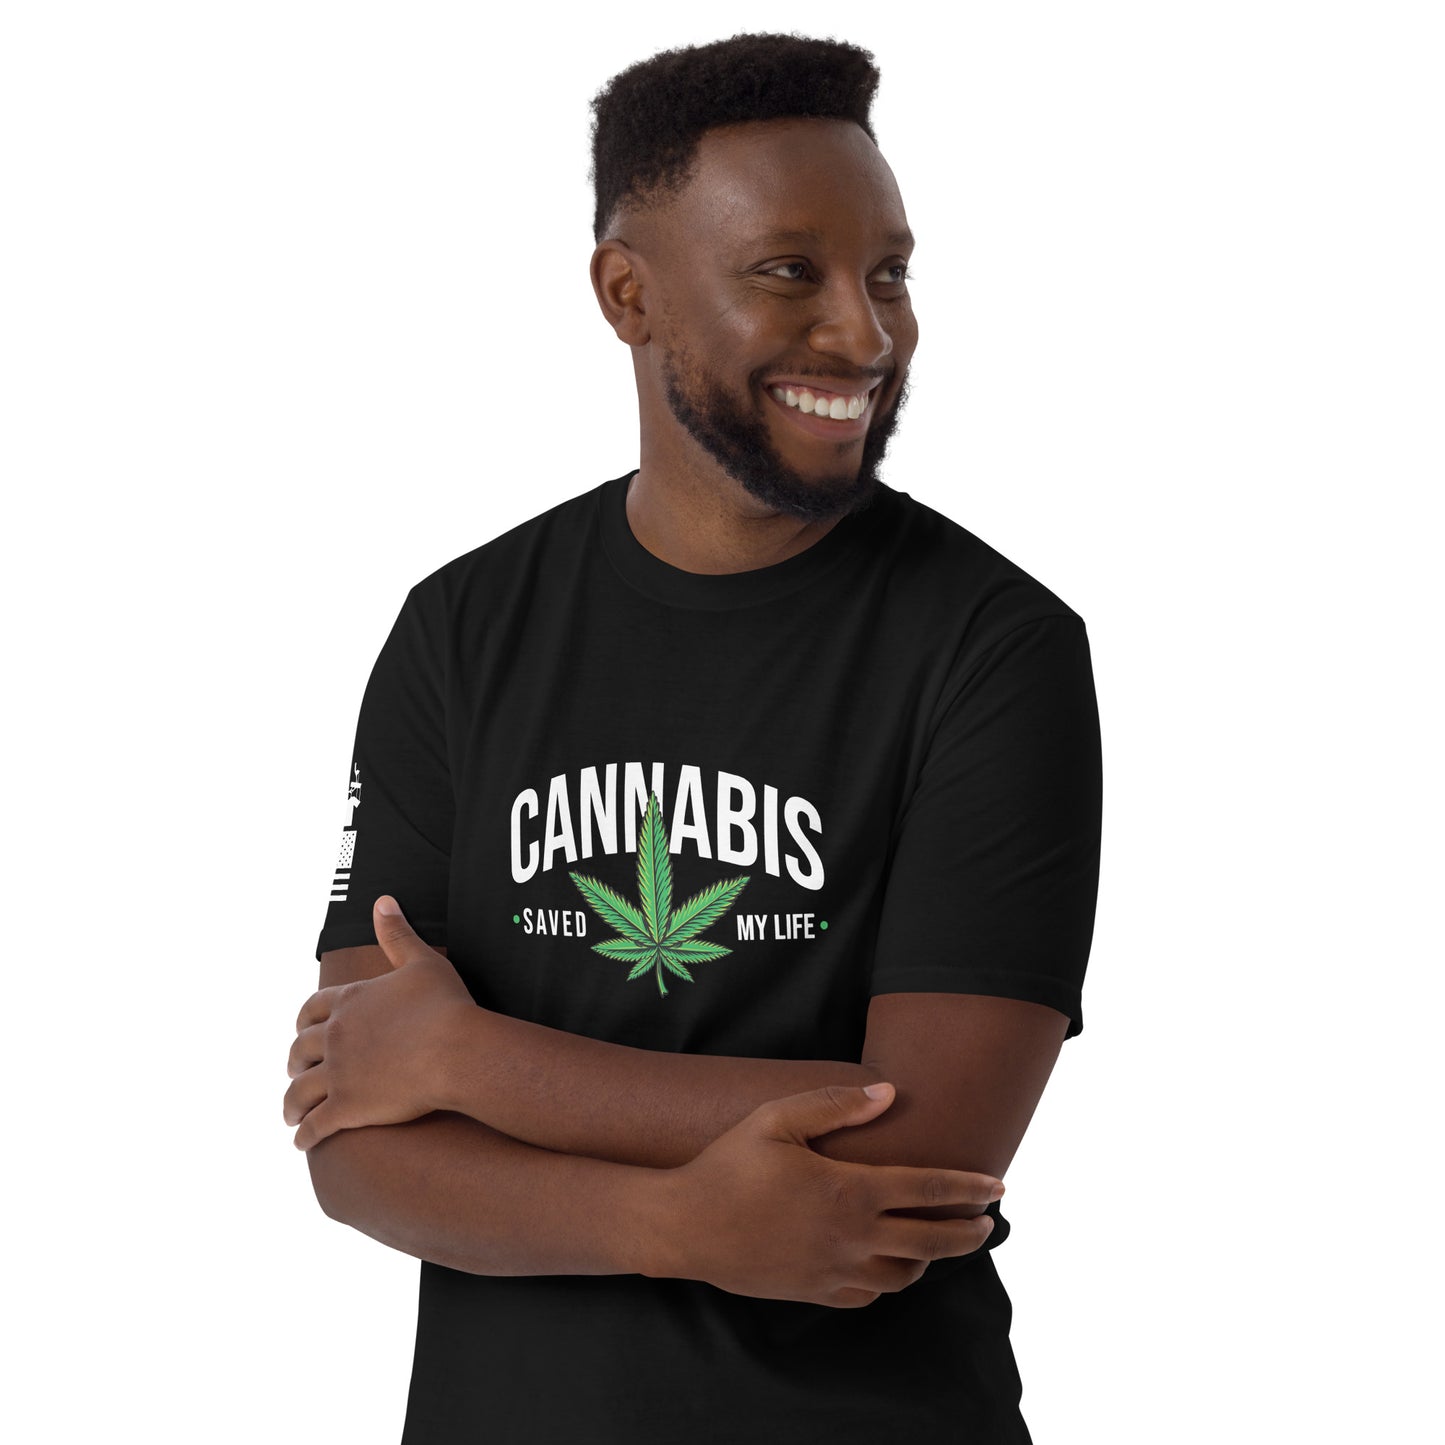 Cannabis - Basic T-Shirt | TheShirtfather